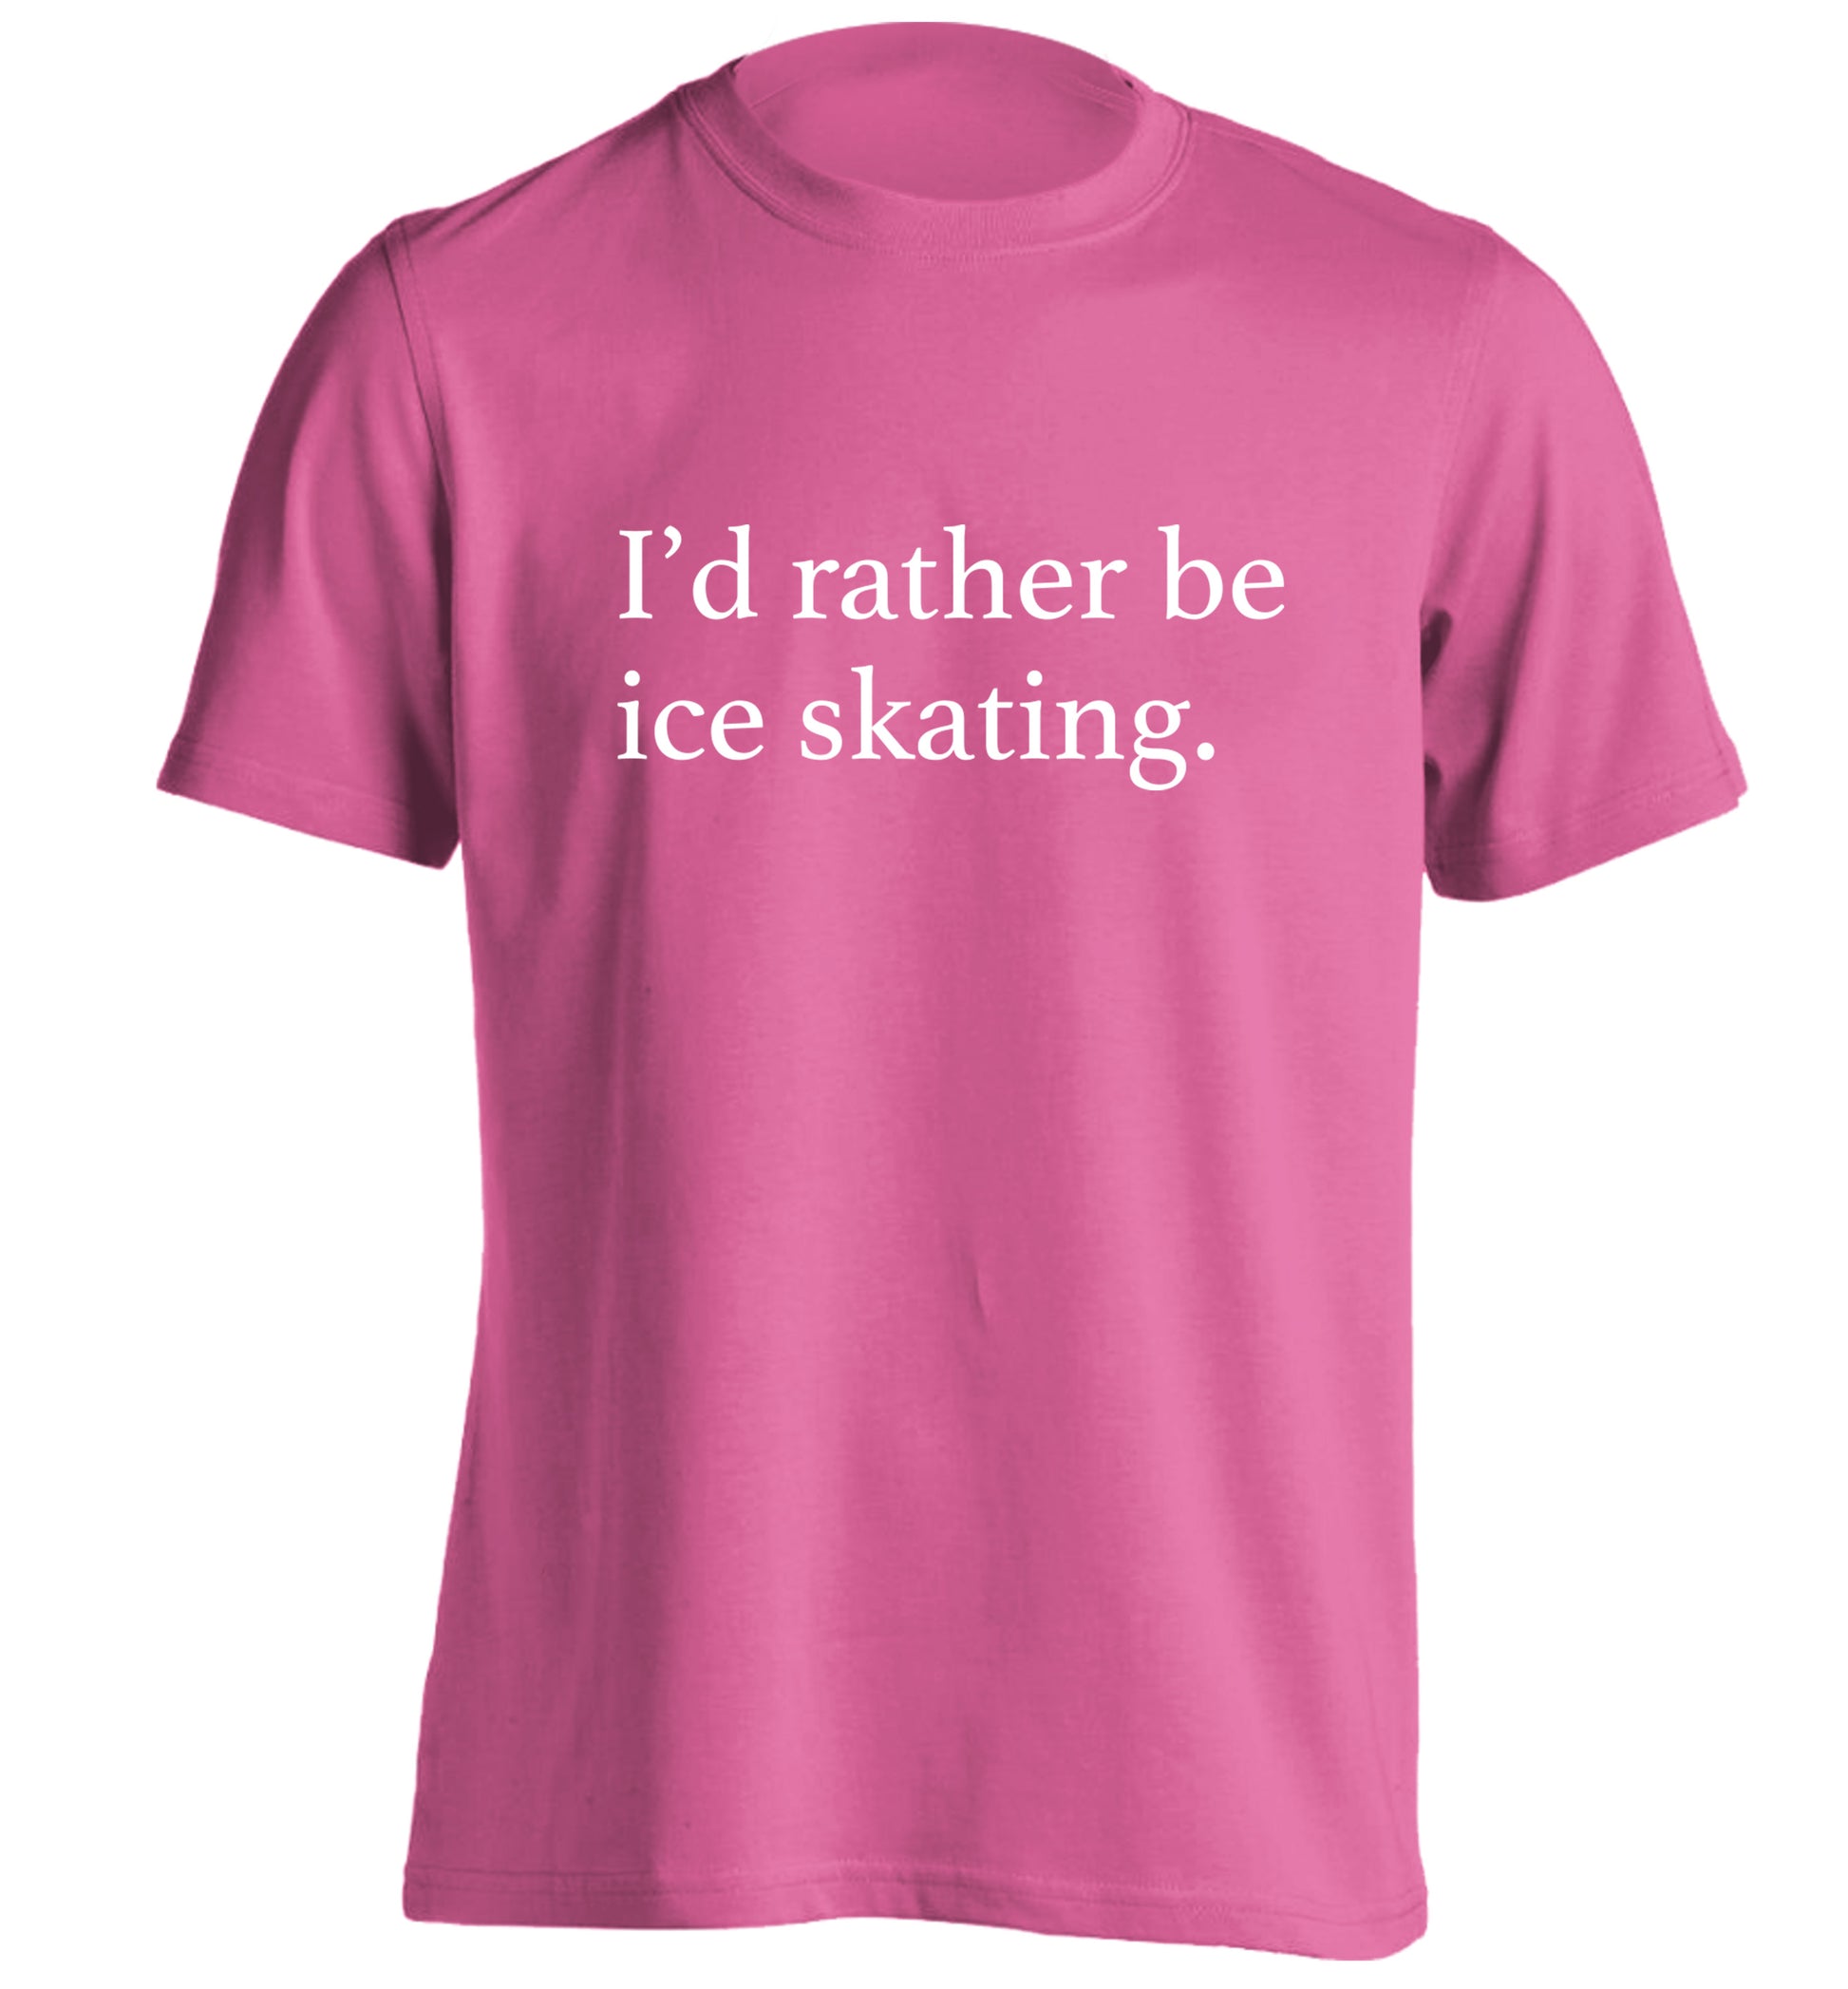 I'd rather be ice skating adults unisexpink Tshirt 2XL